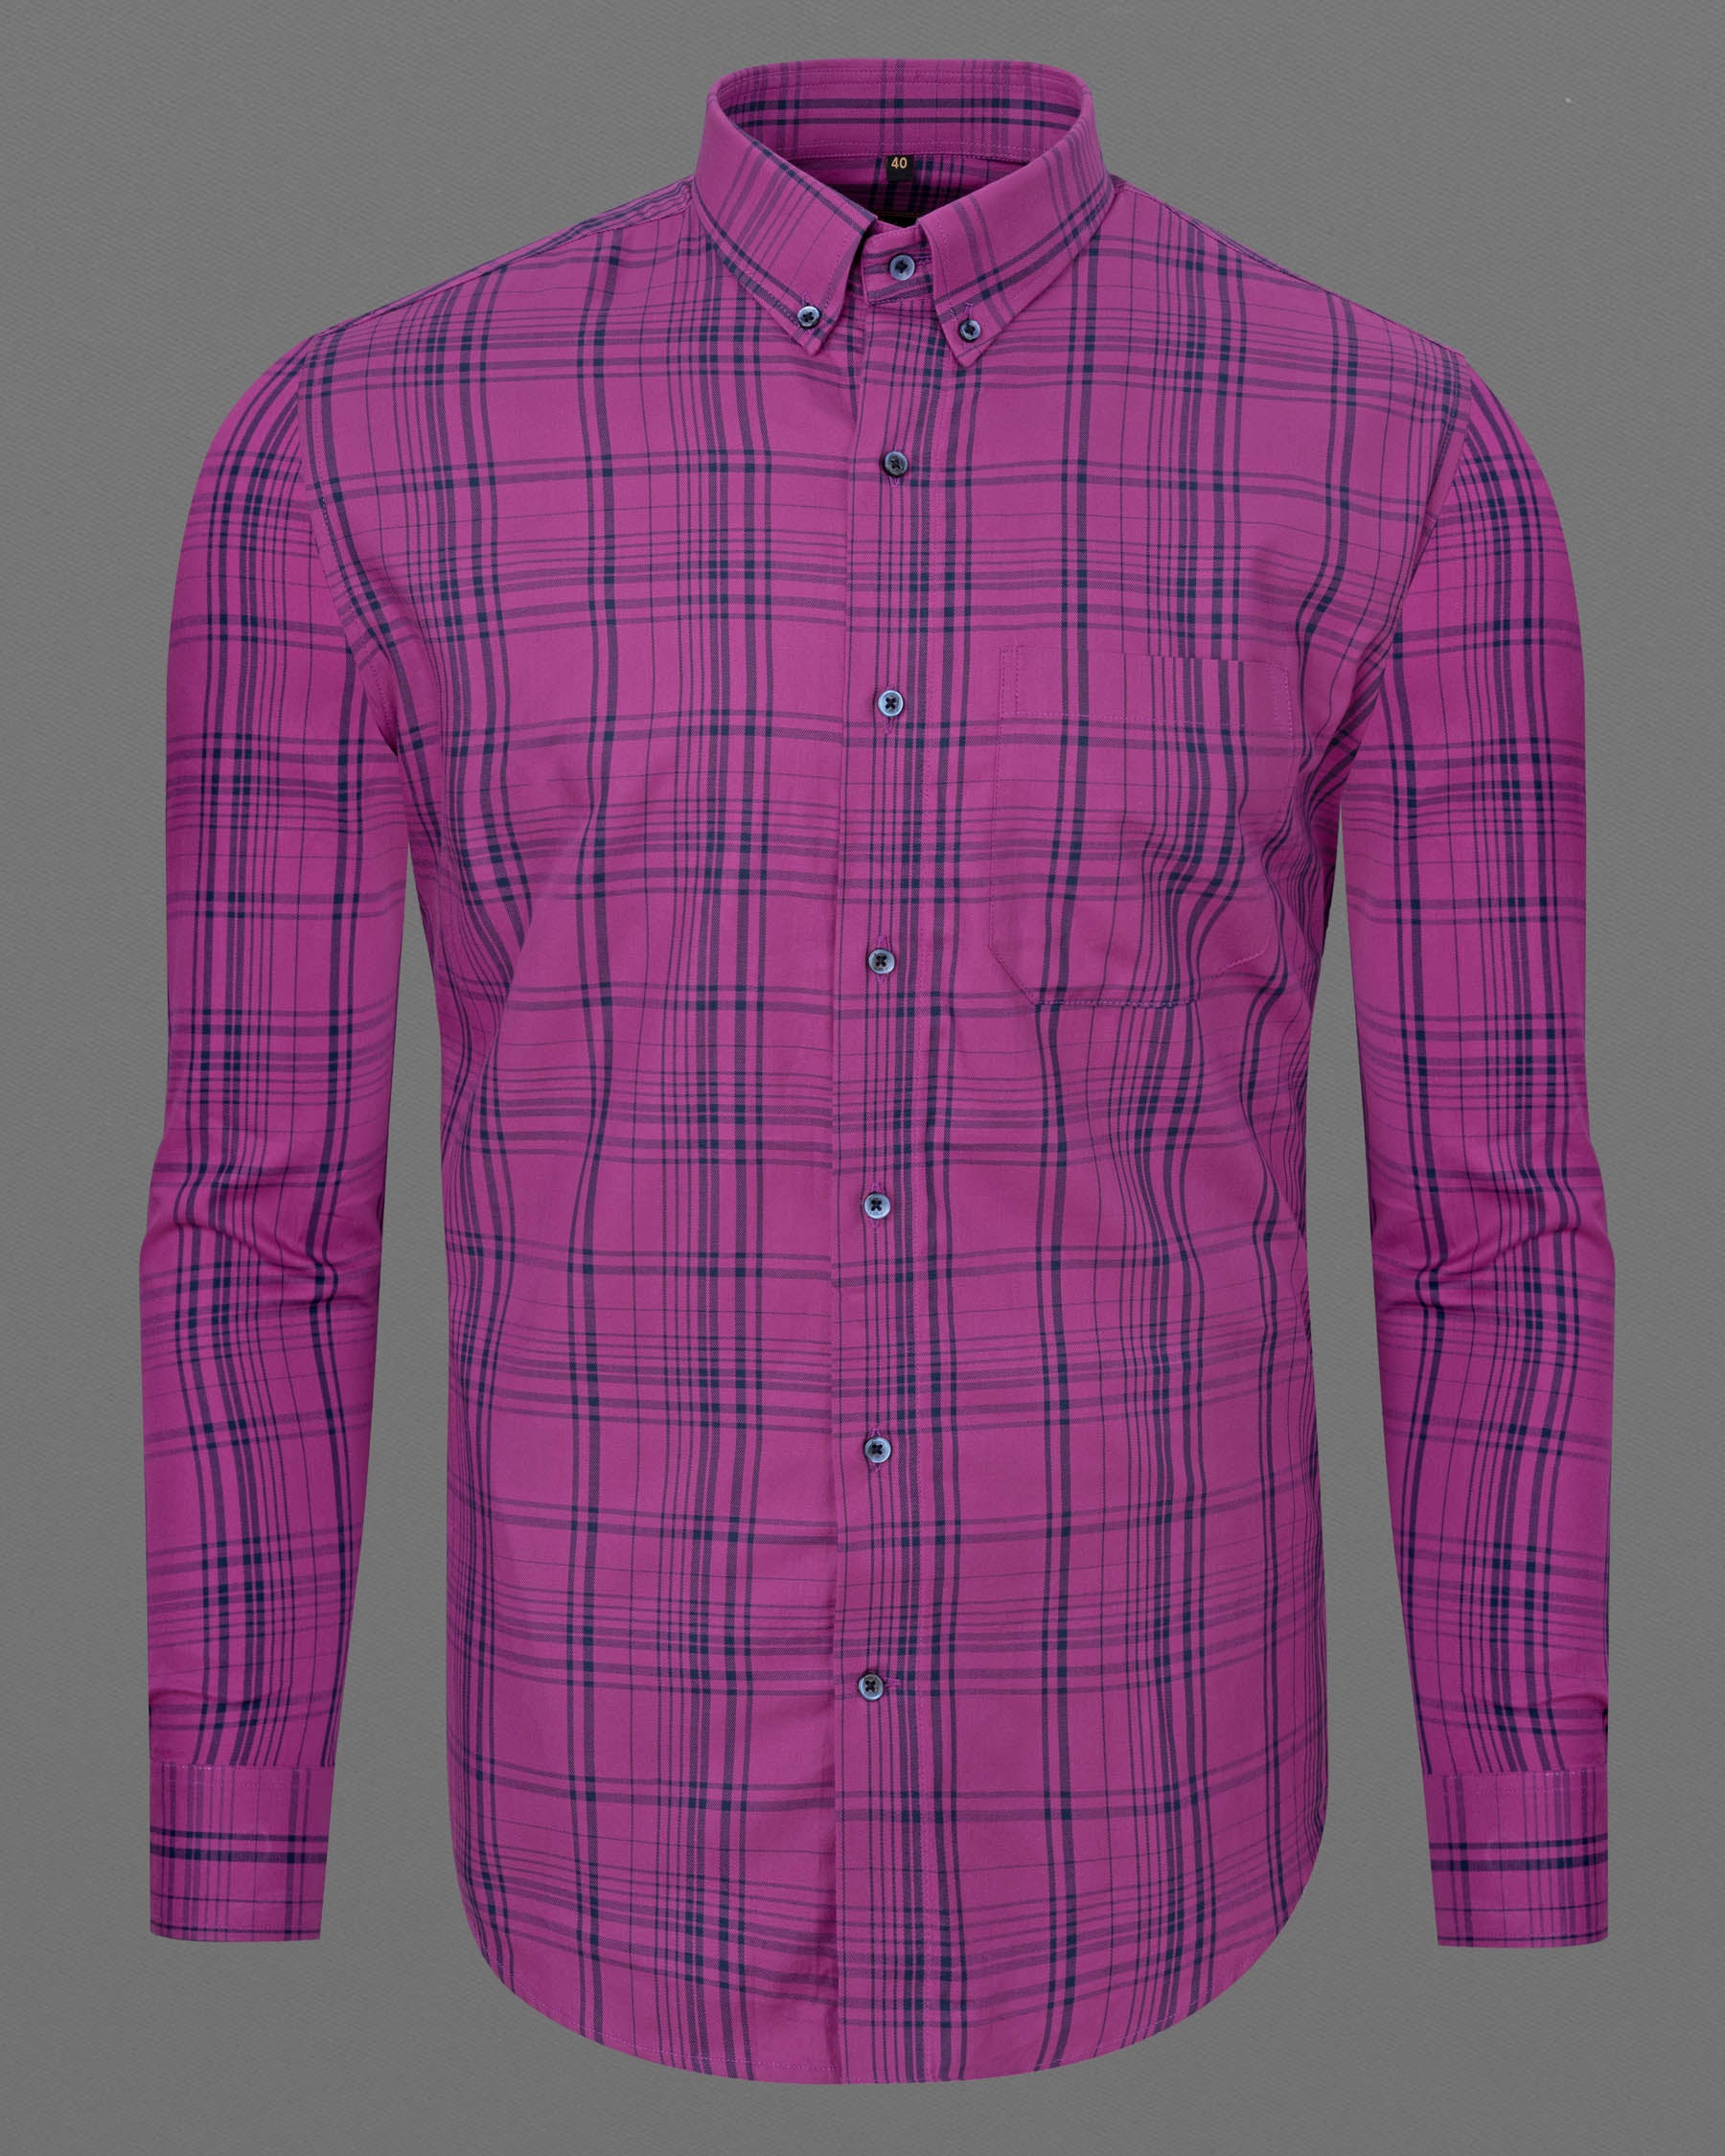 Byzantium Purple and Cyprus Blue Plaid Twill Textured Premium Cotton Shirt